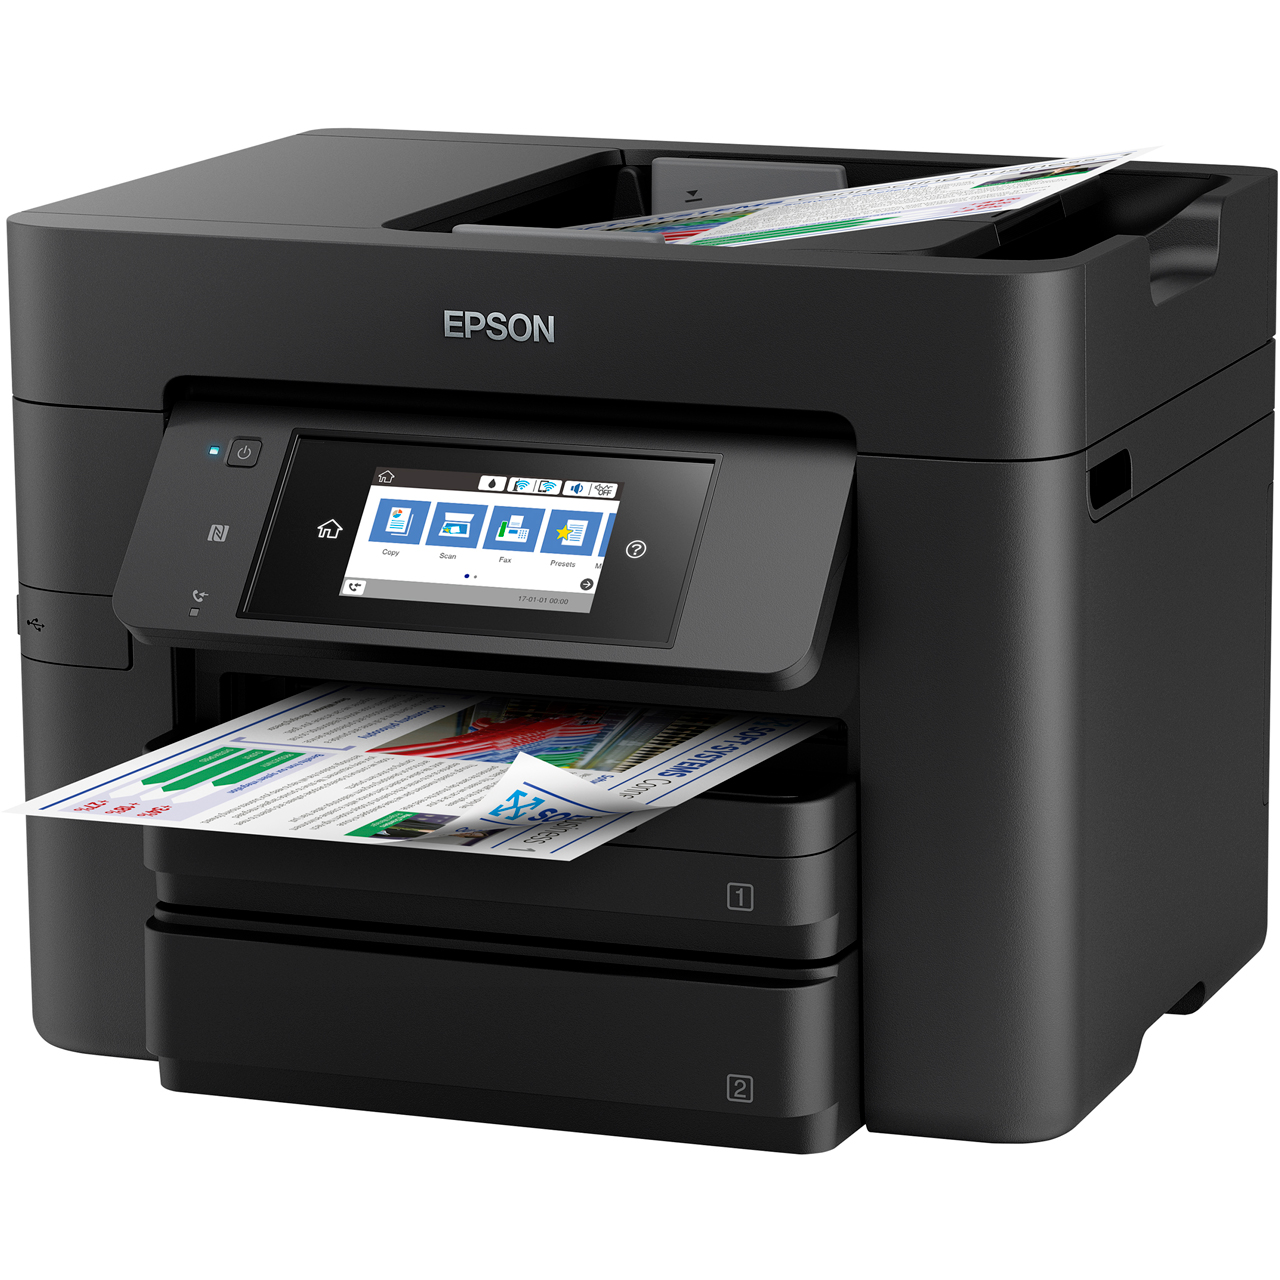 Epson WorkForce Pro WF-4740 Inkjet Printer Review